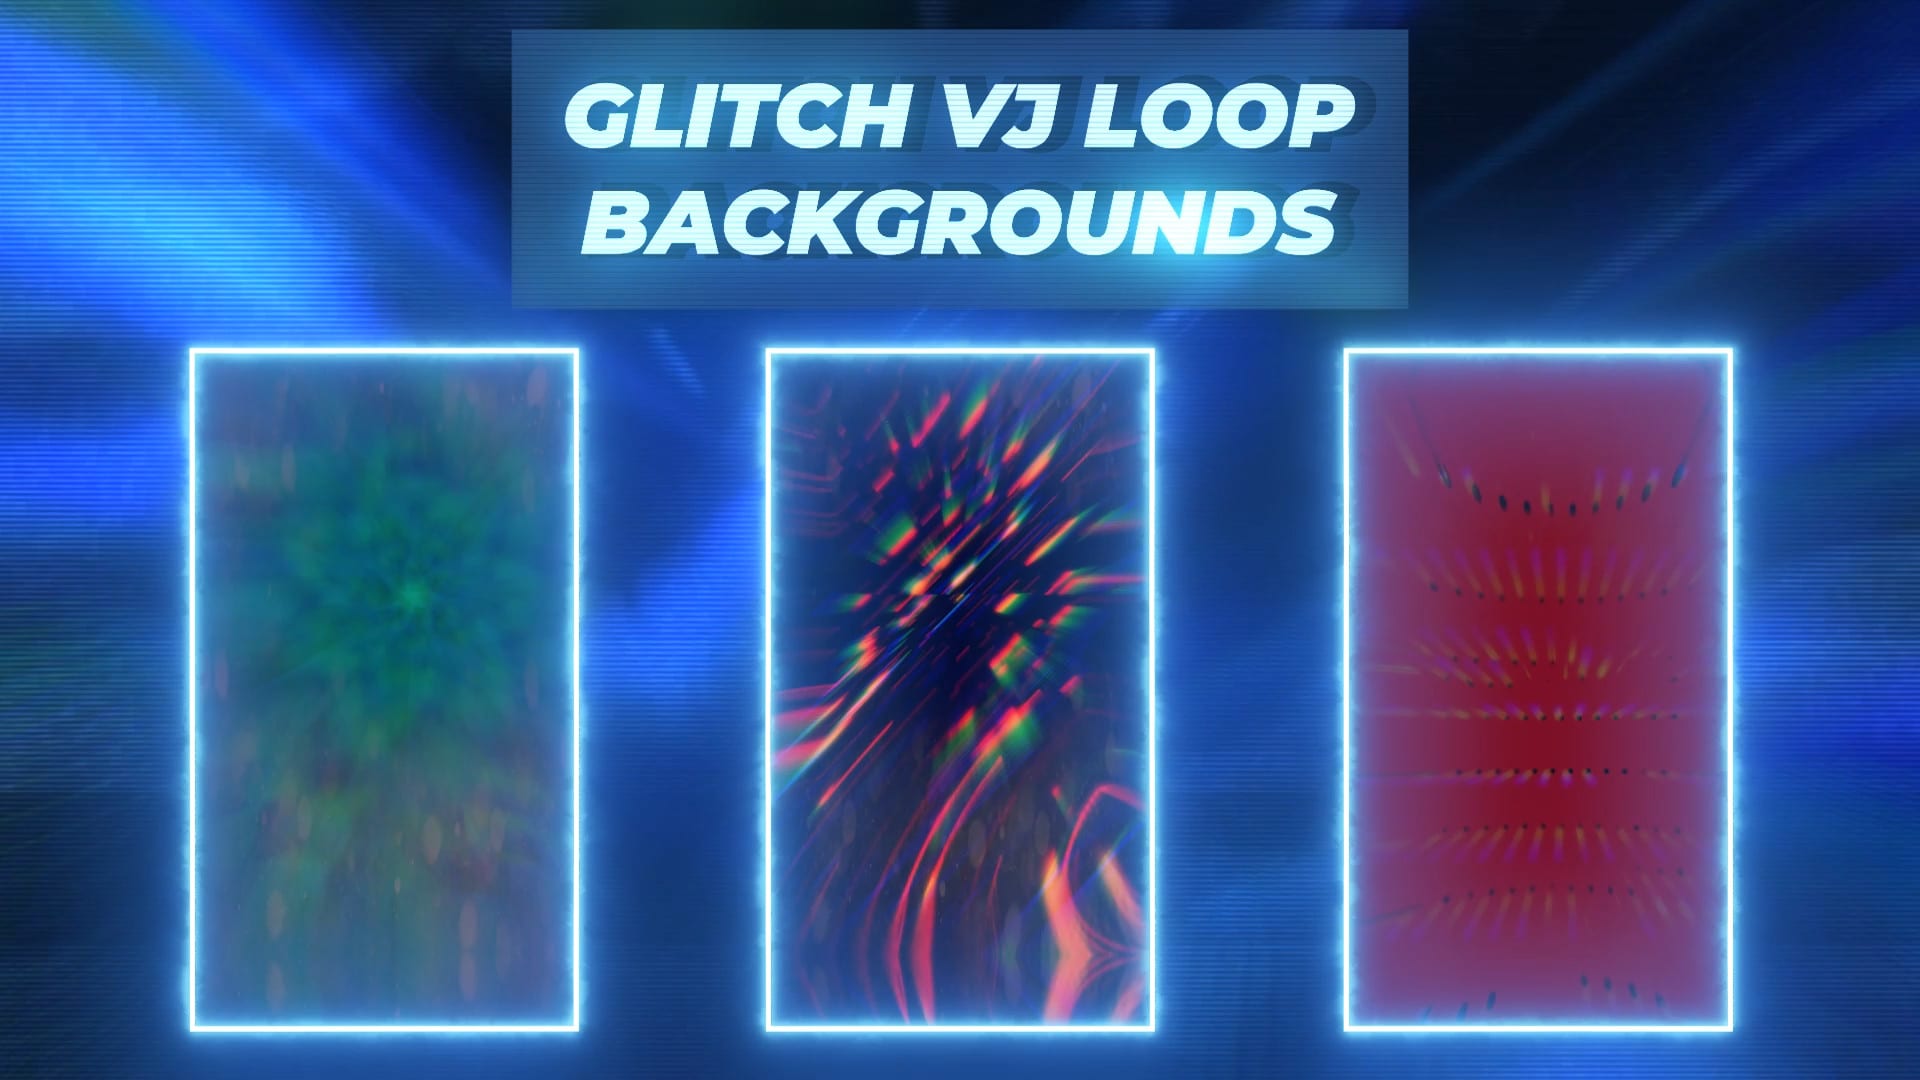 Glitch Door - VJ Video Loop. Full HD Glitch Motion Background